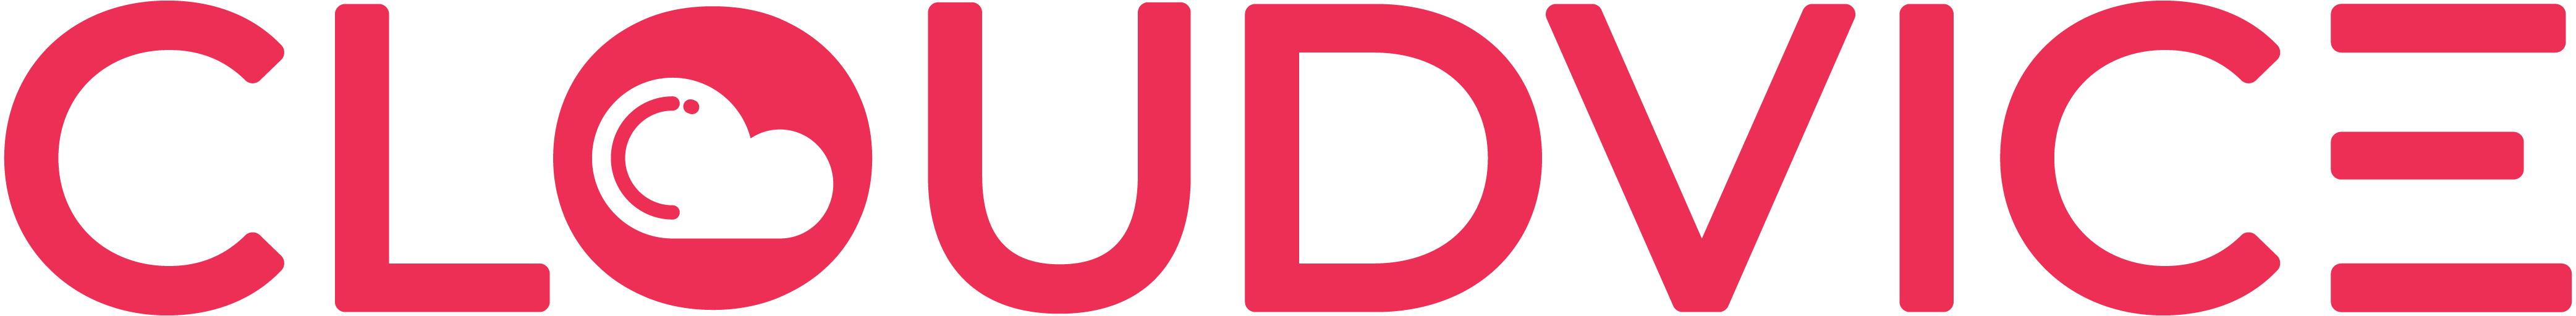 cloudvice-logo